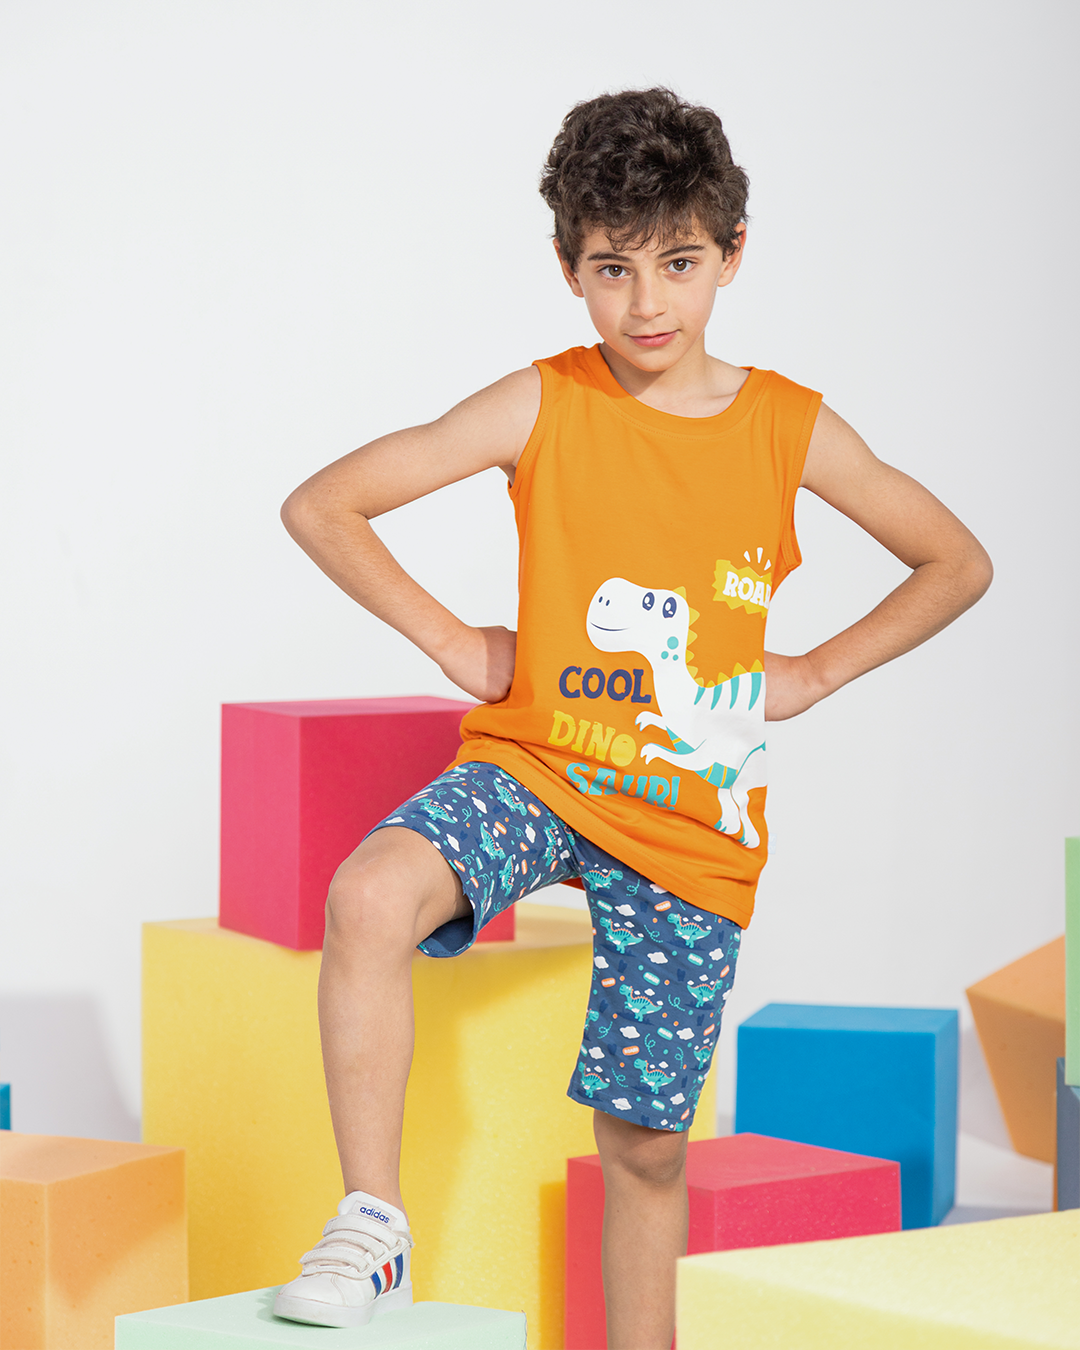 COOl DINO Children's pajamas, boys shorts, printed with dinosaurs